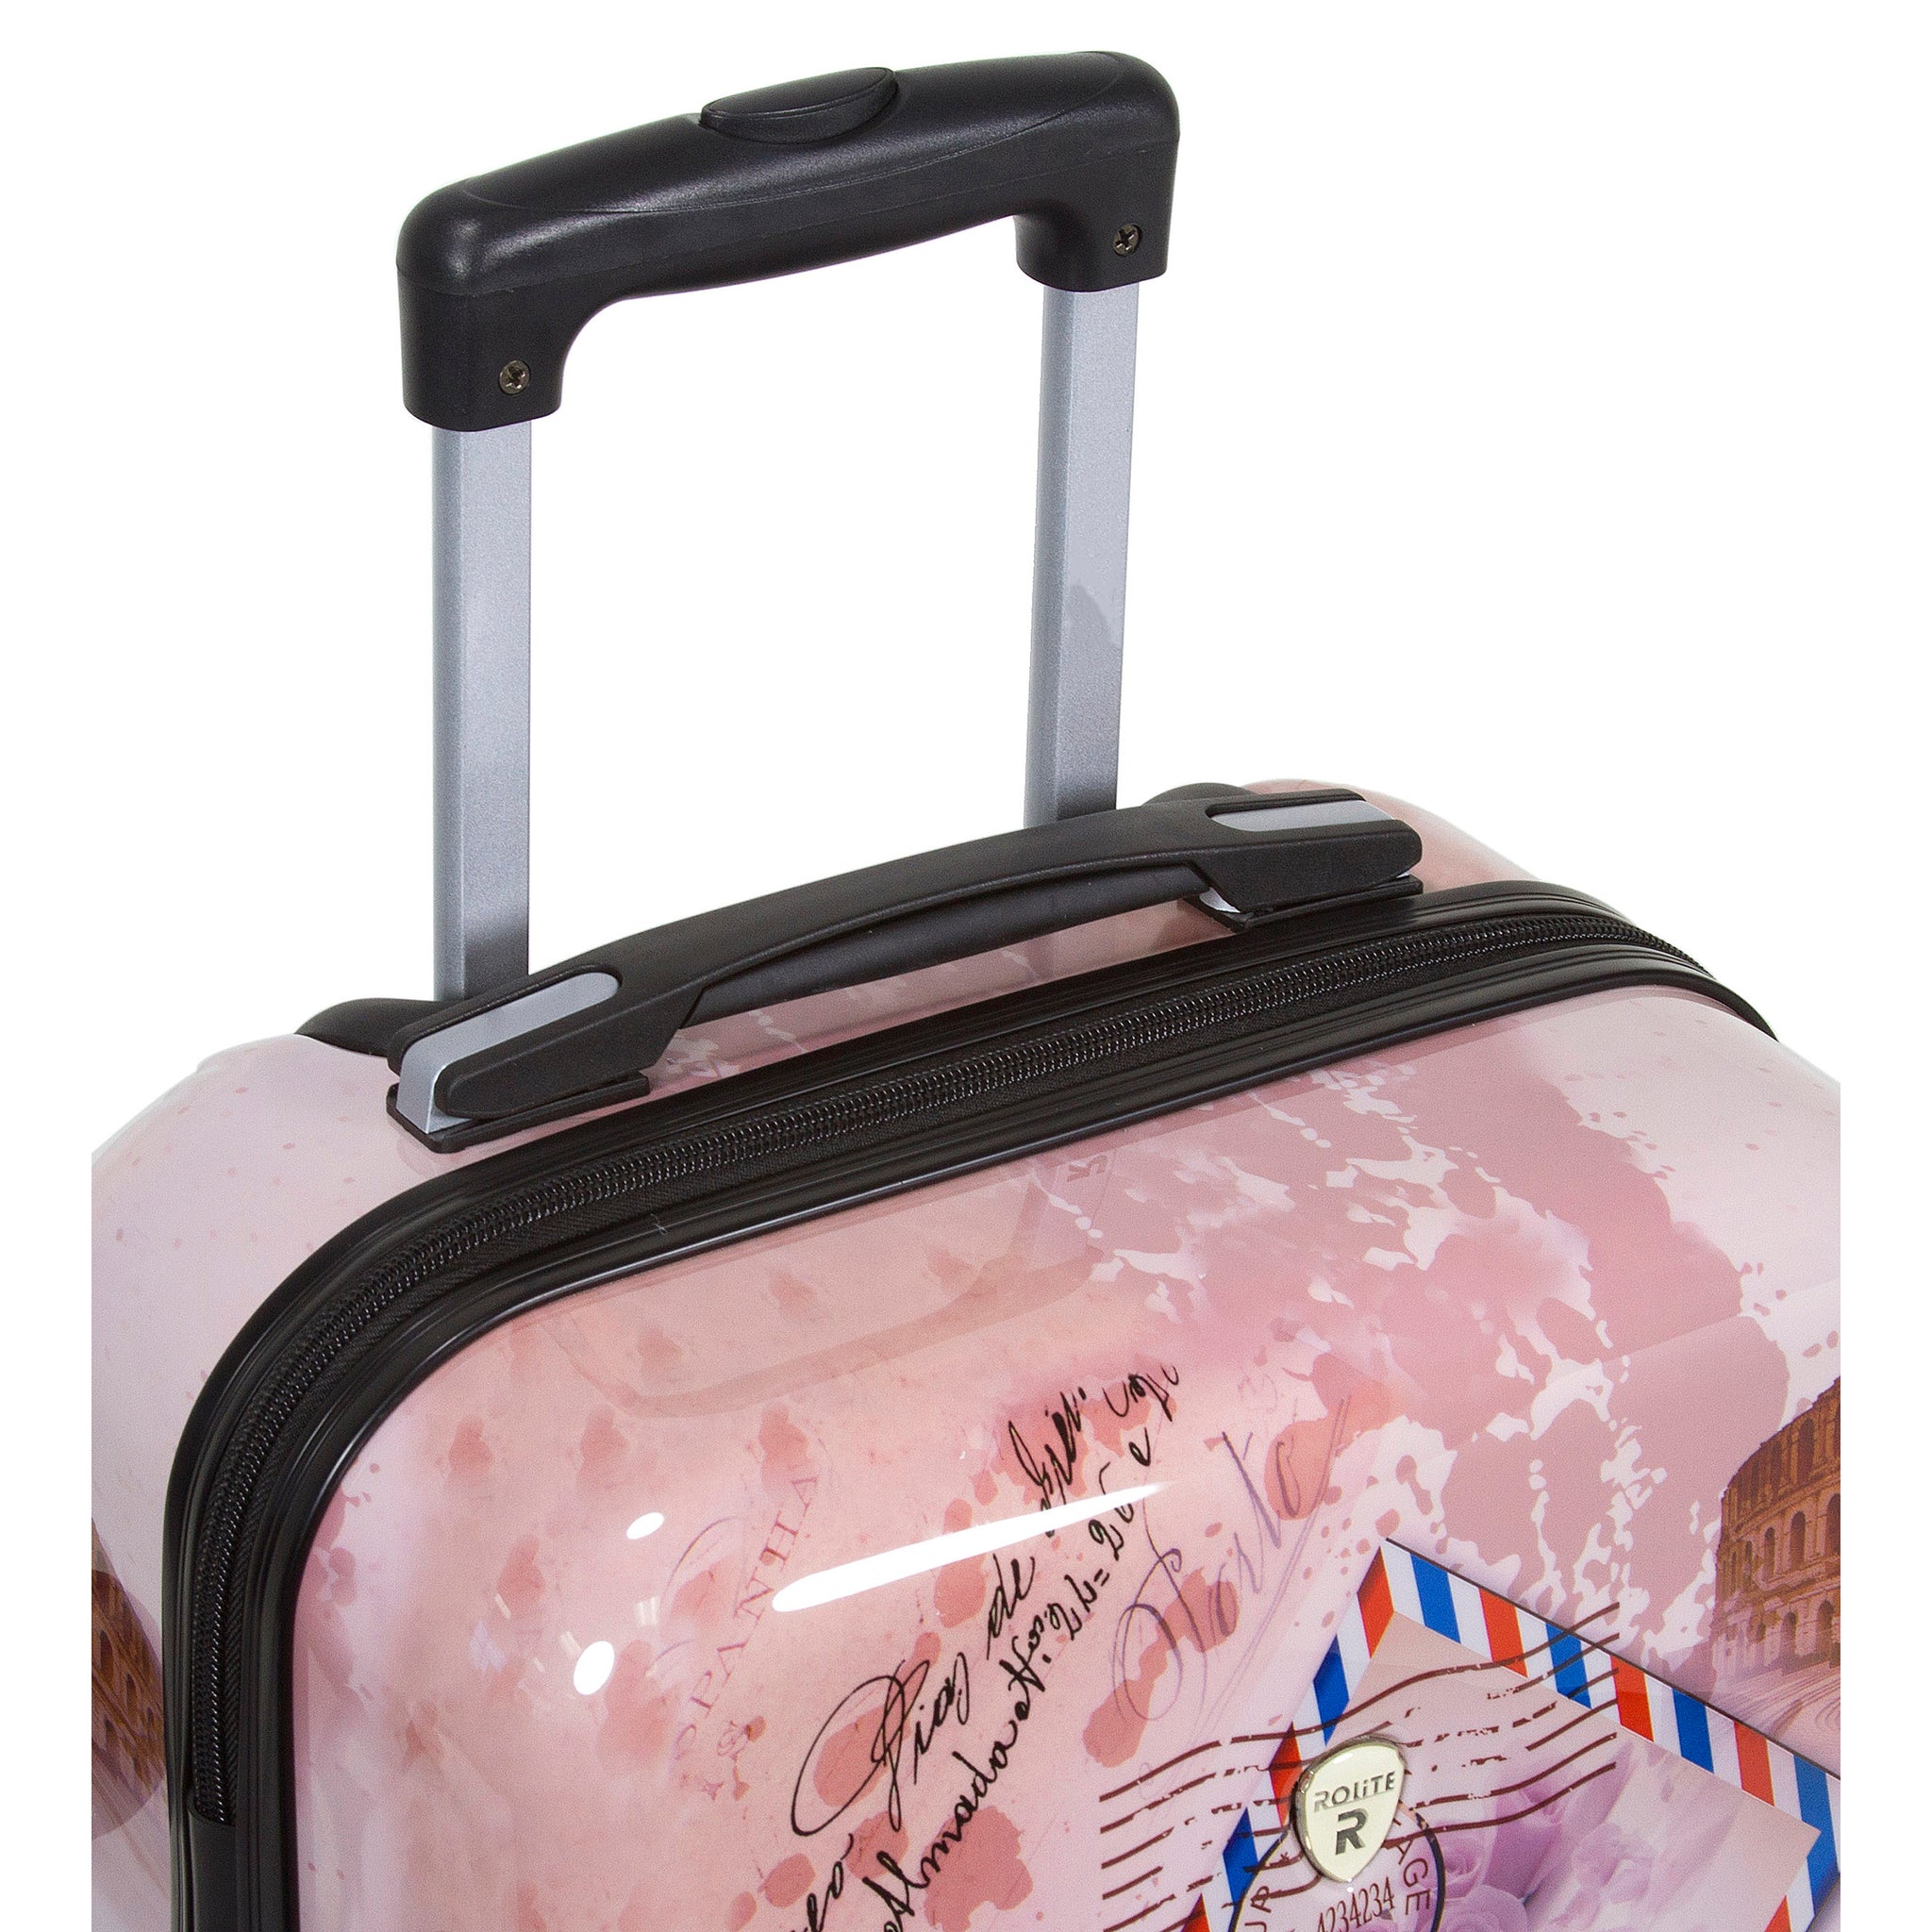 World Traveler Paris Collection 3-Piece Hardside Spinner Luggage Set